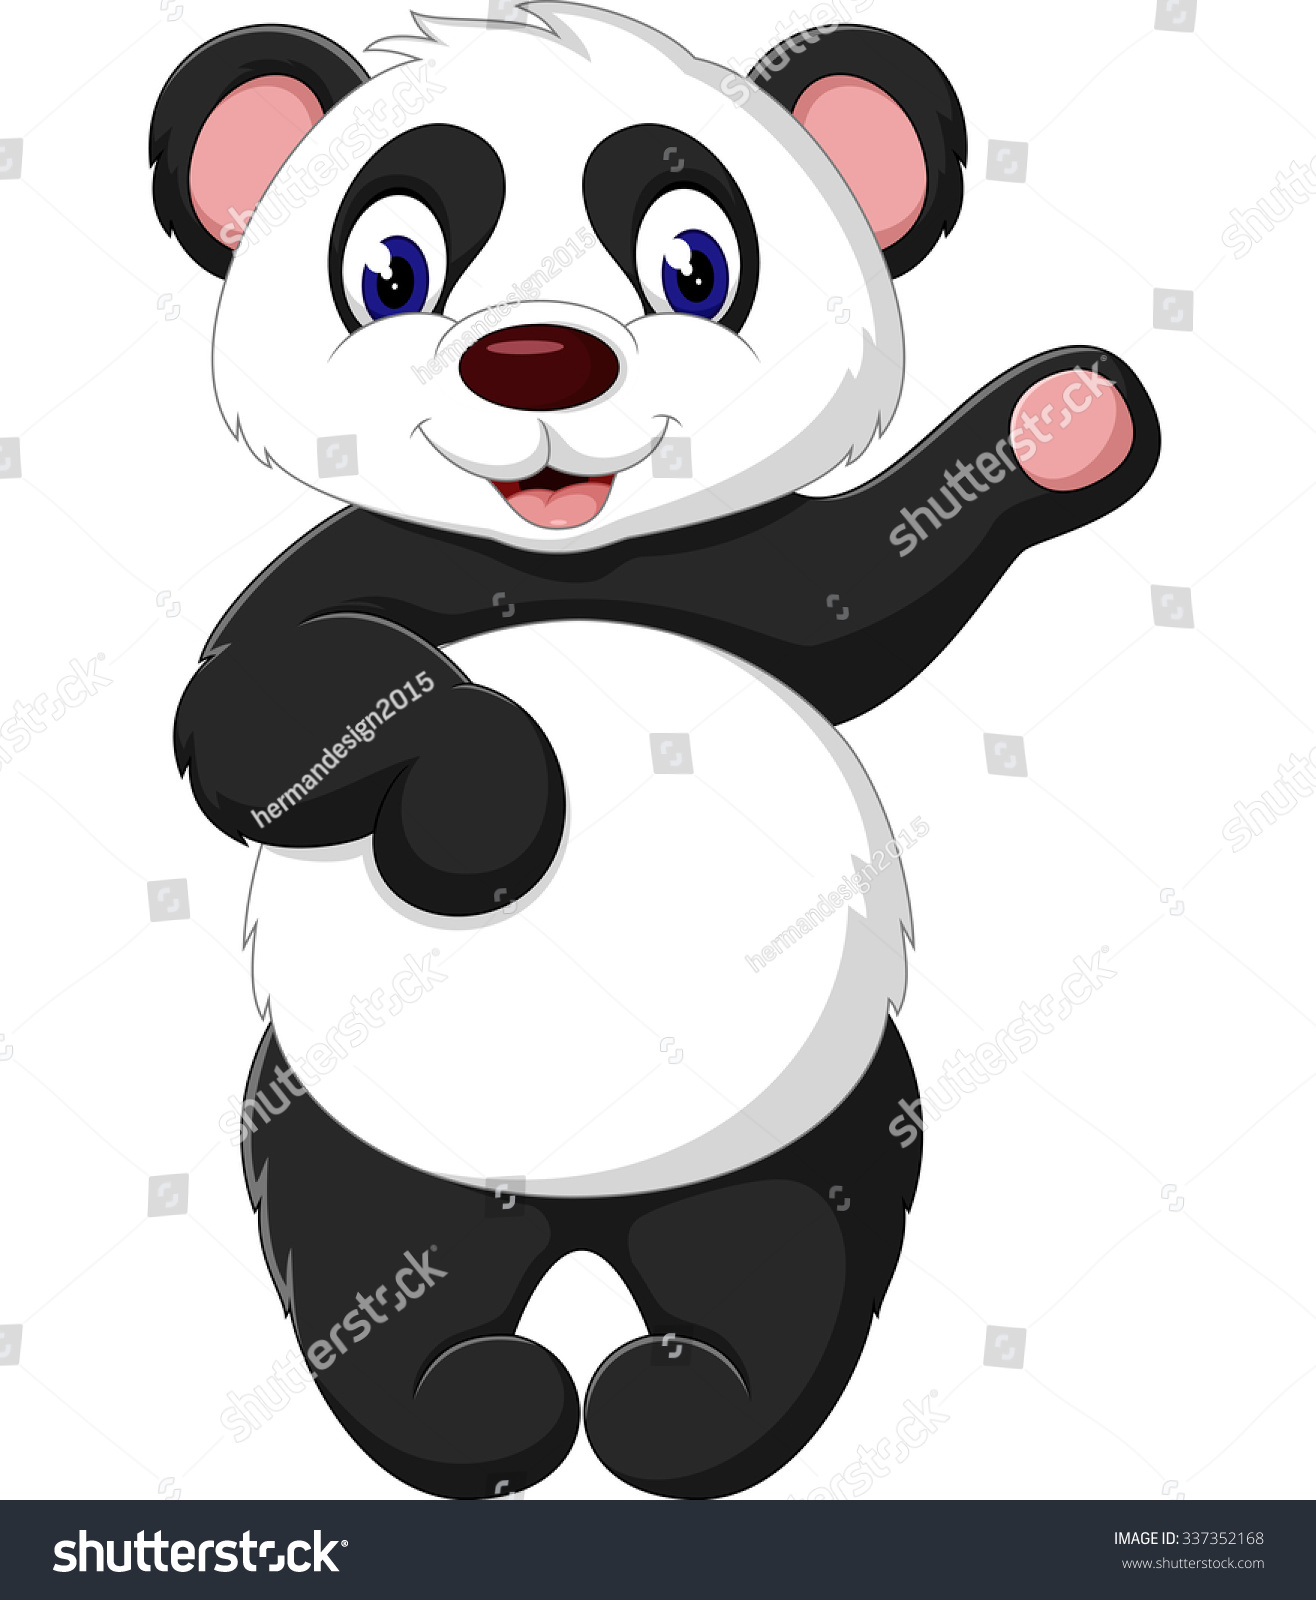 Cute Cartoon Panda Of Illustration - 337352168 : Shutterstock